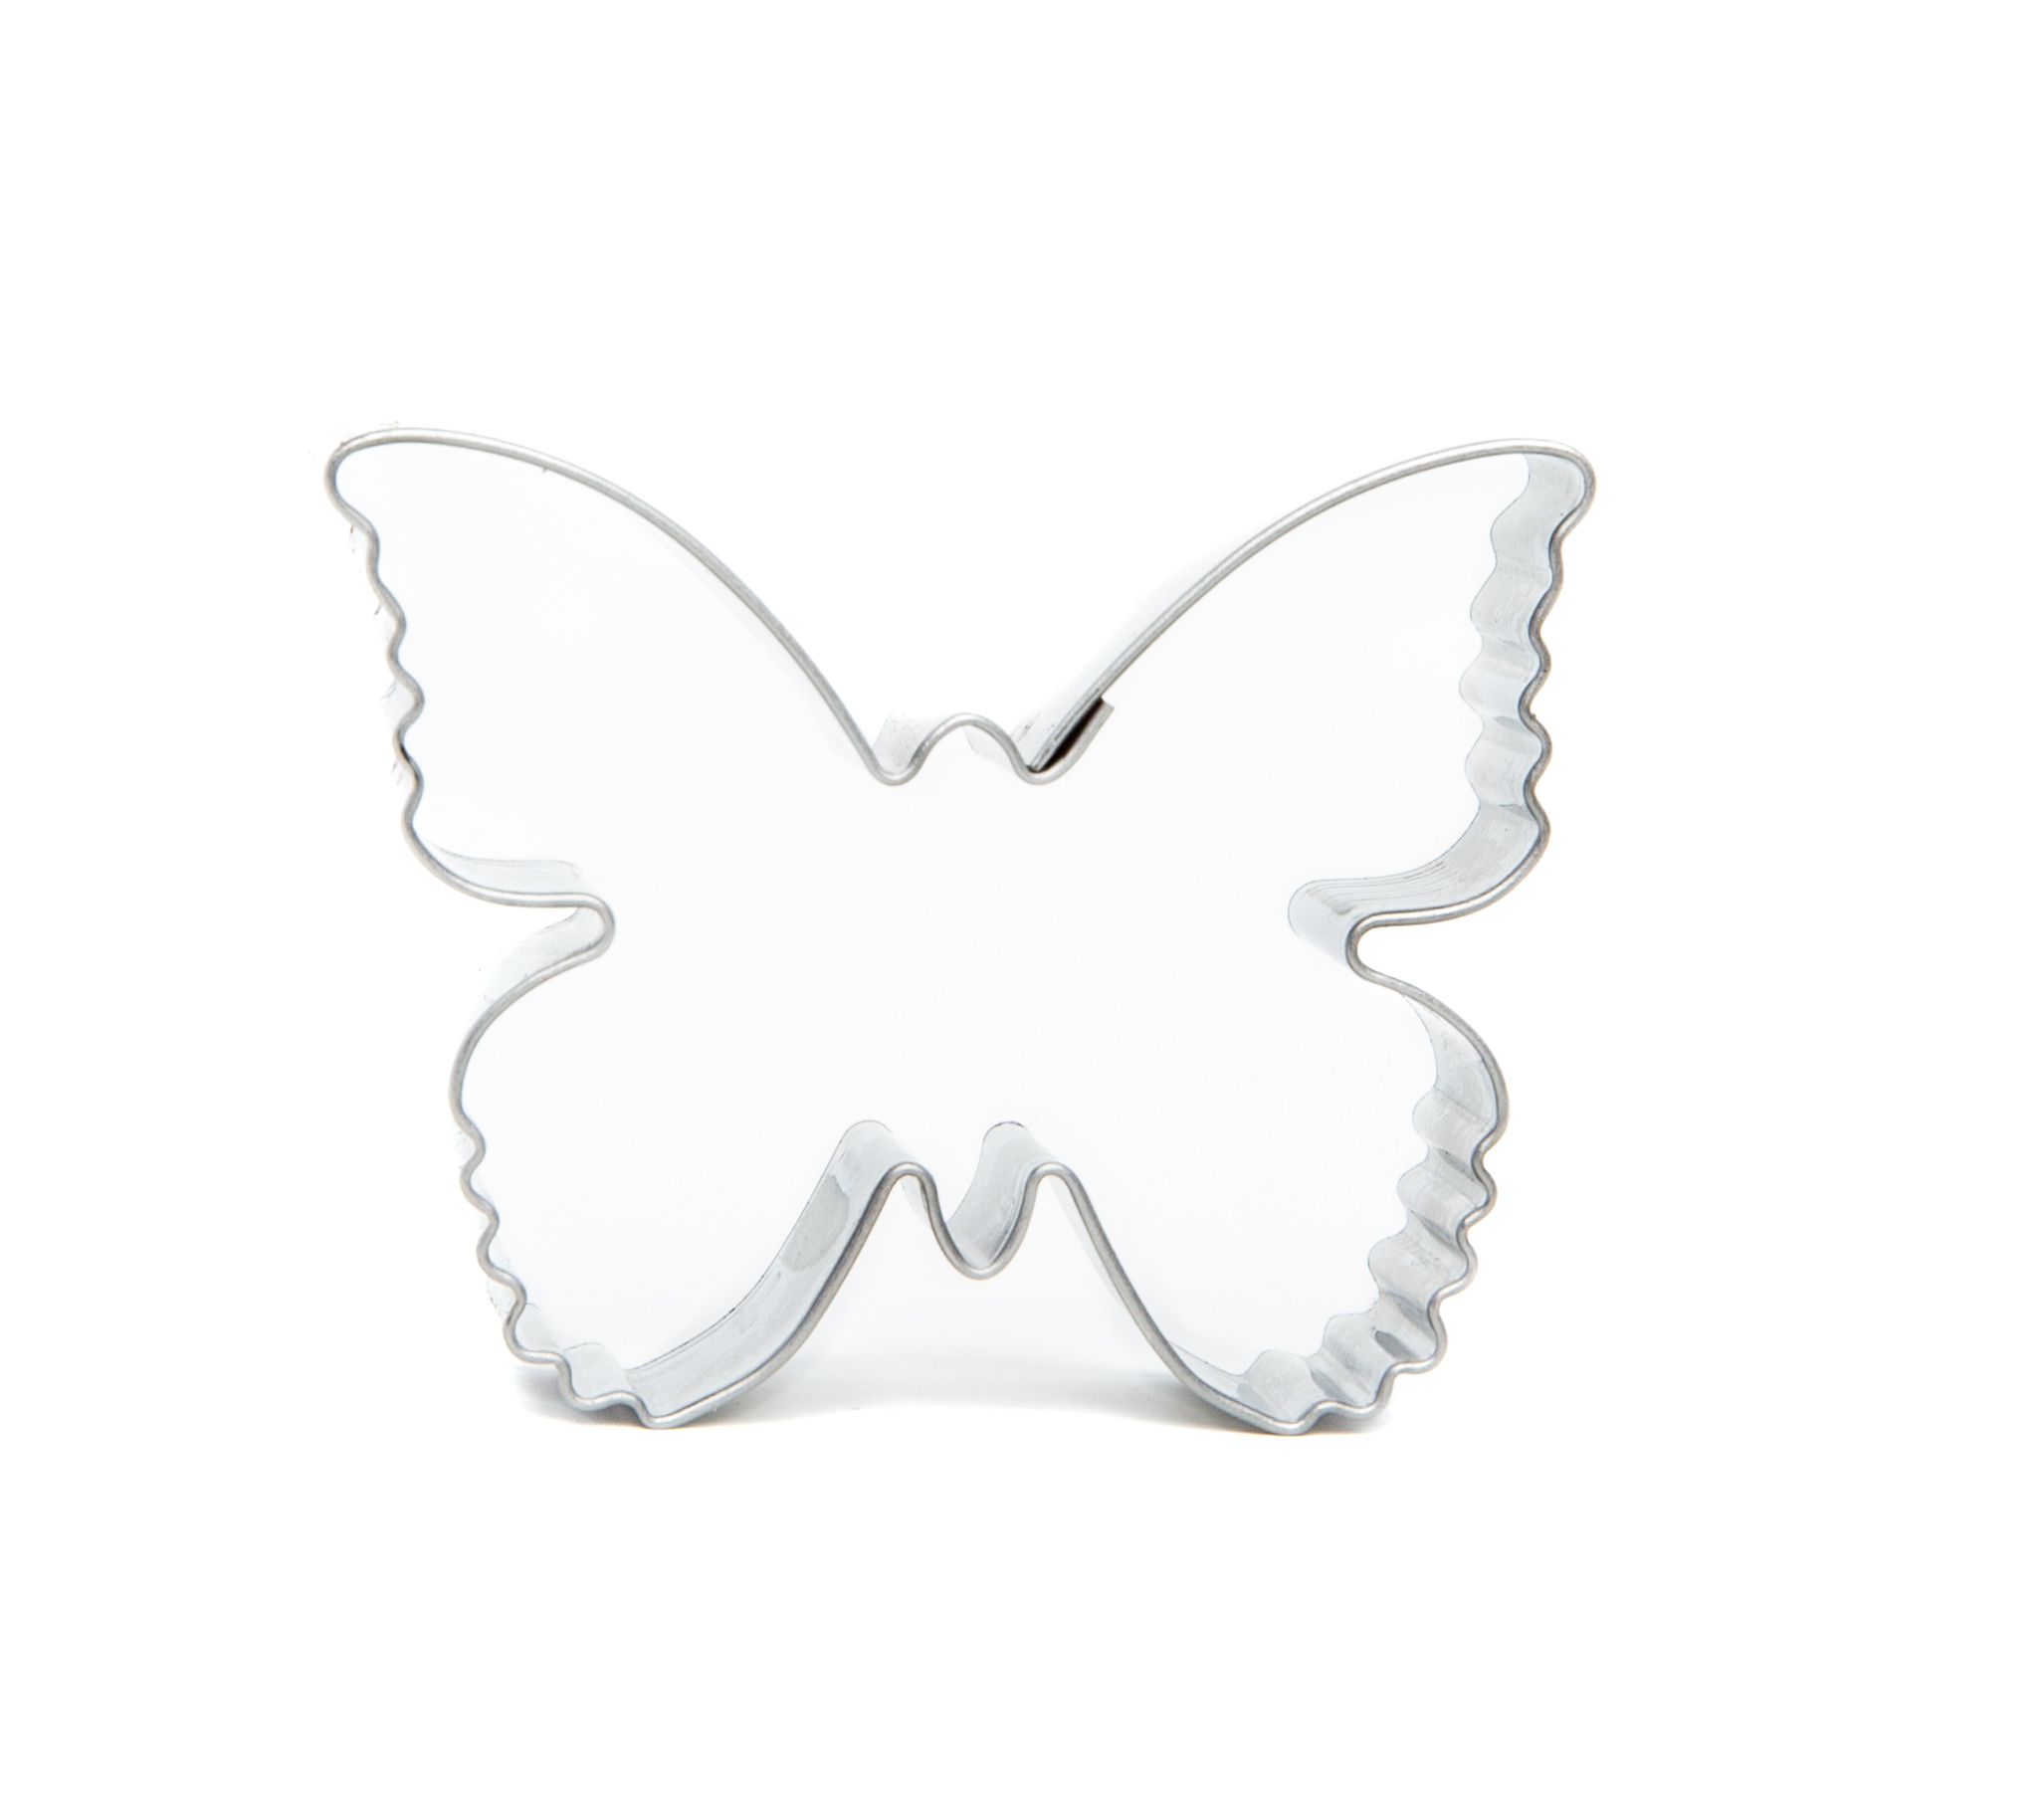 Ausstechform Schmetterling 55x45mm rostfrei Edelstahl Höhe: 16mm